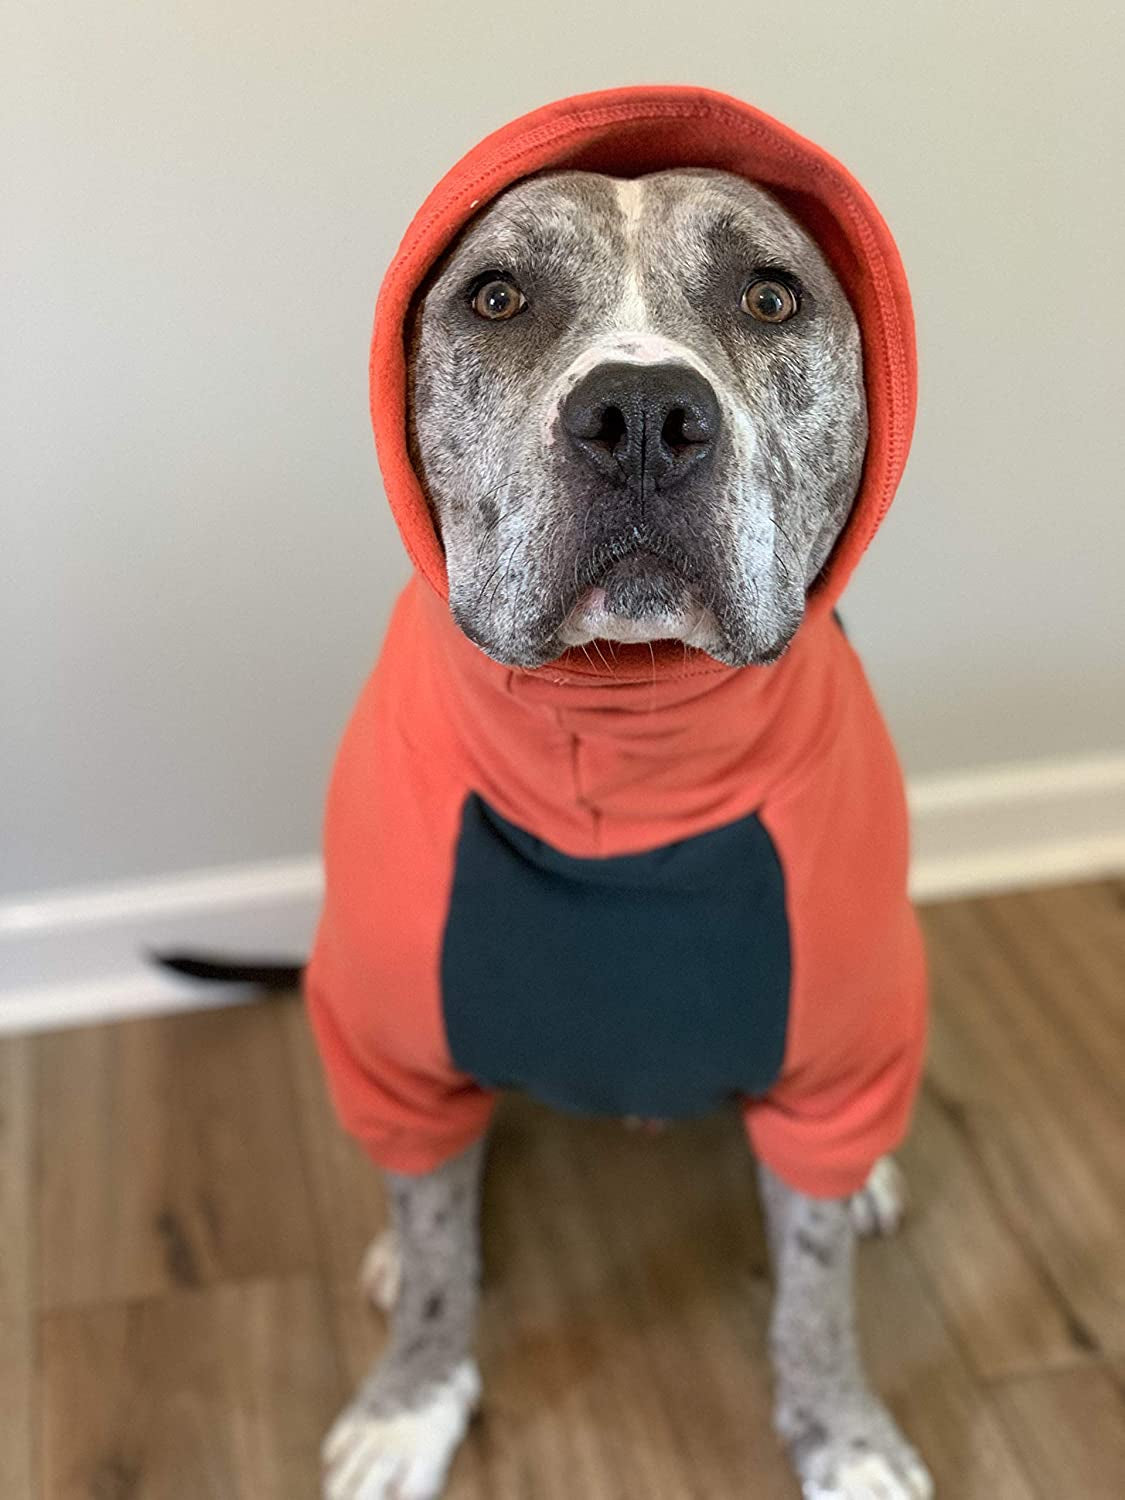 Tooth and Honey Dog Sweater/Pitbull Large Dog Sweater/Dog Sweatshirt/Dark Green and Orange (X-Large)